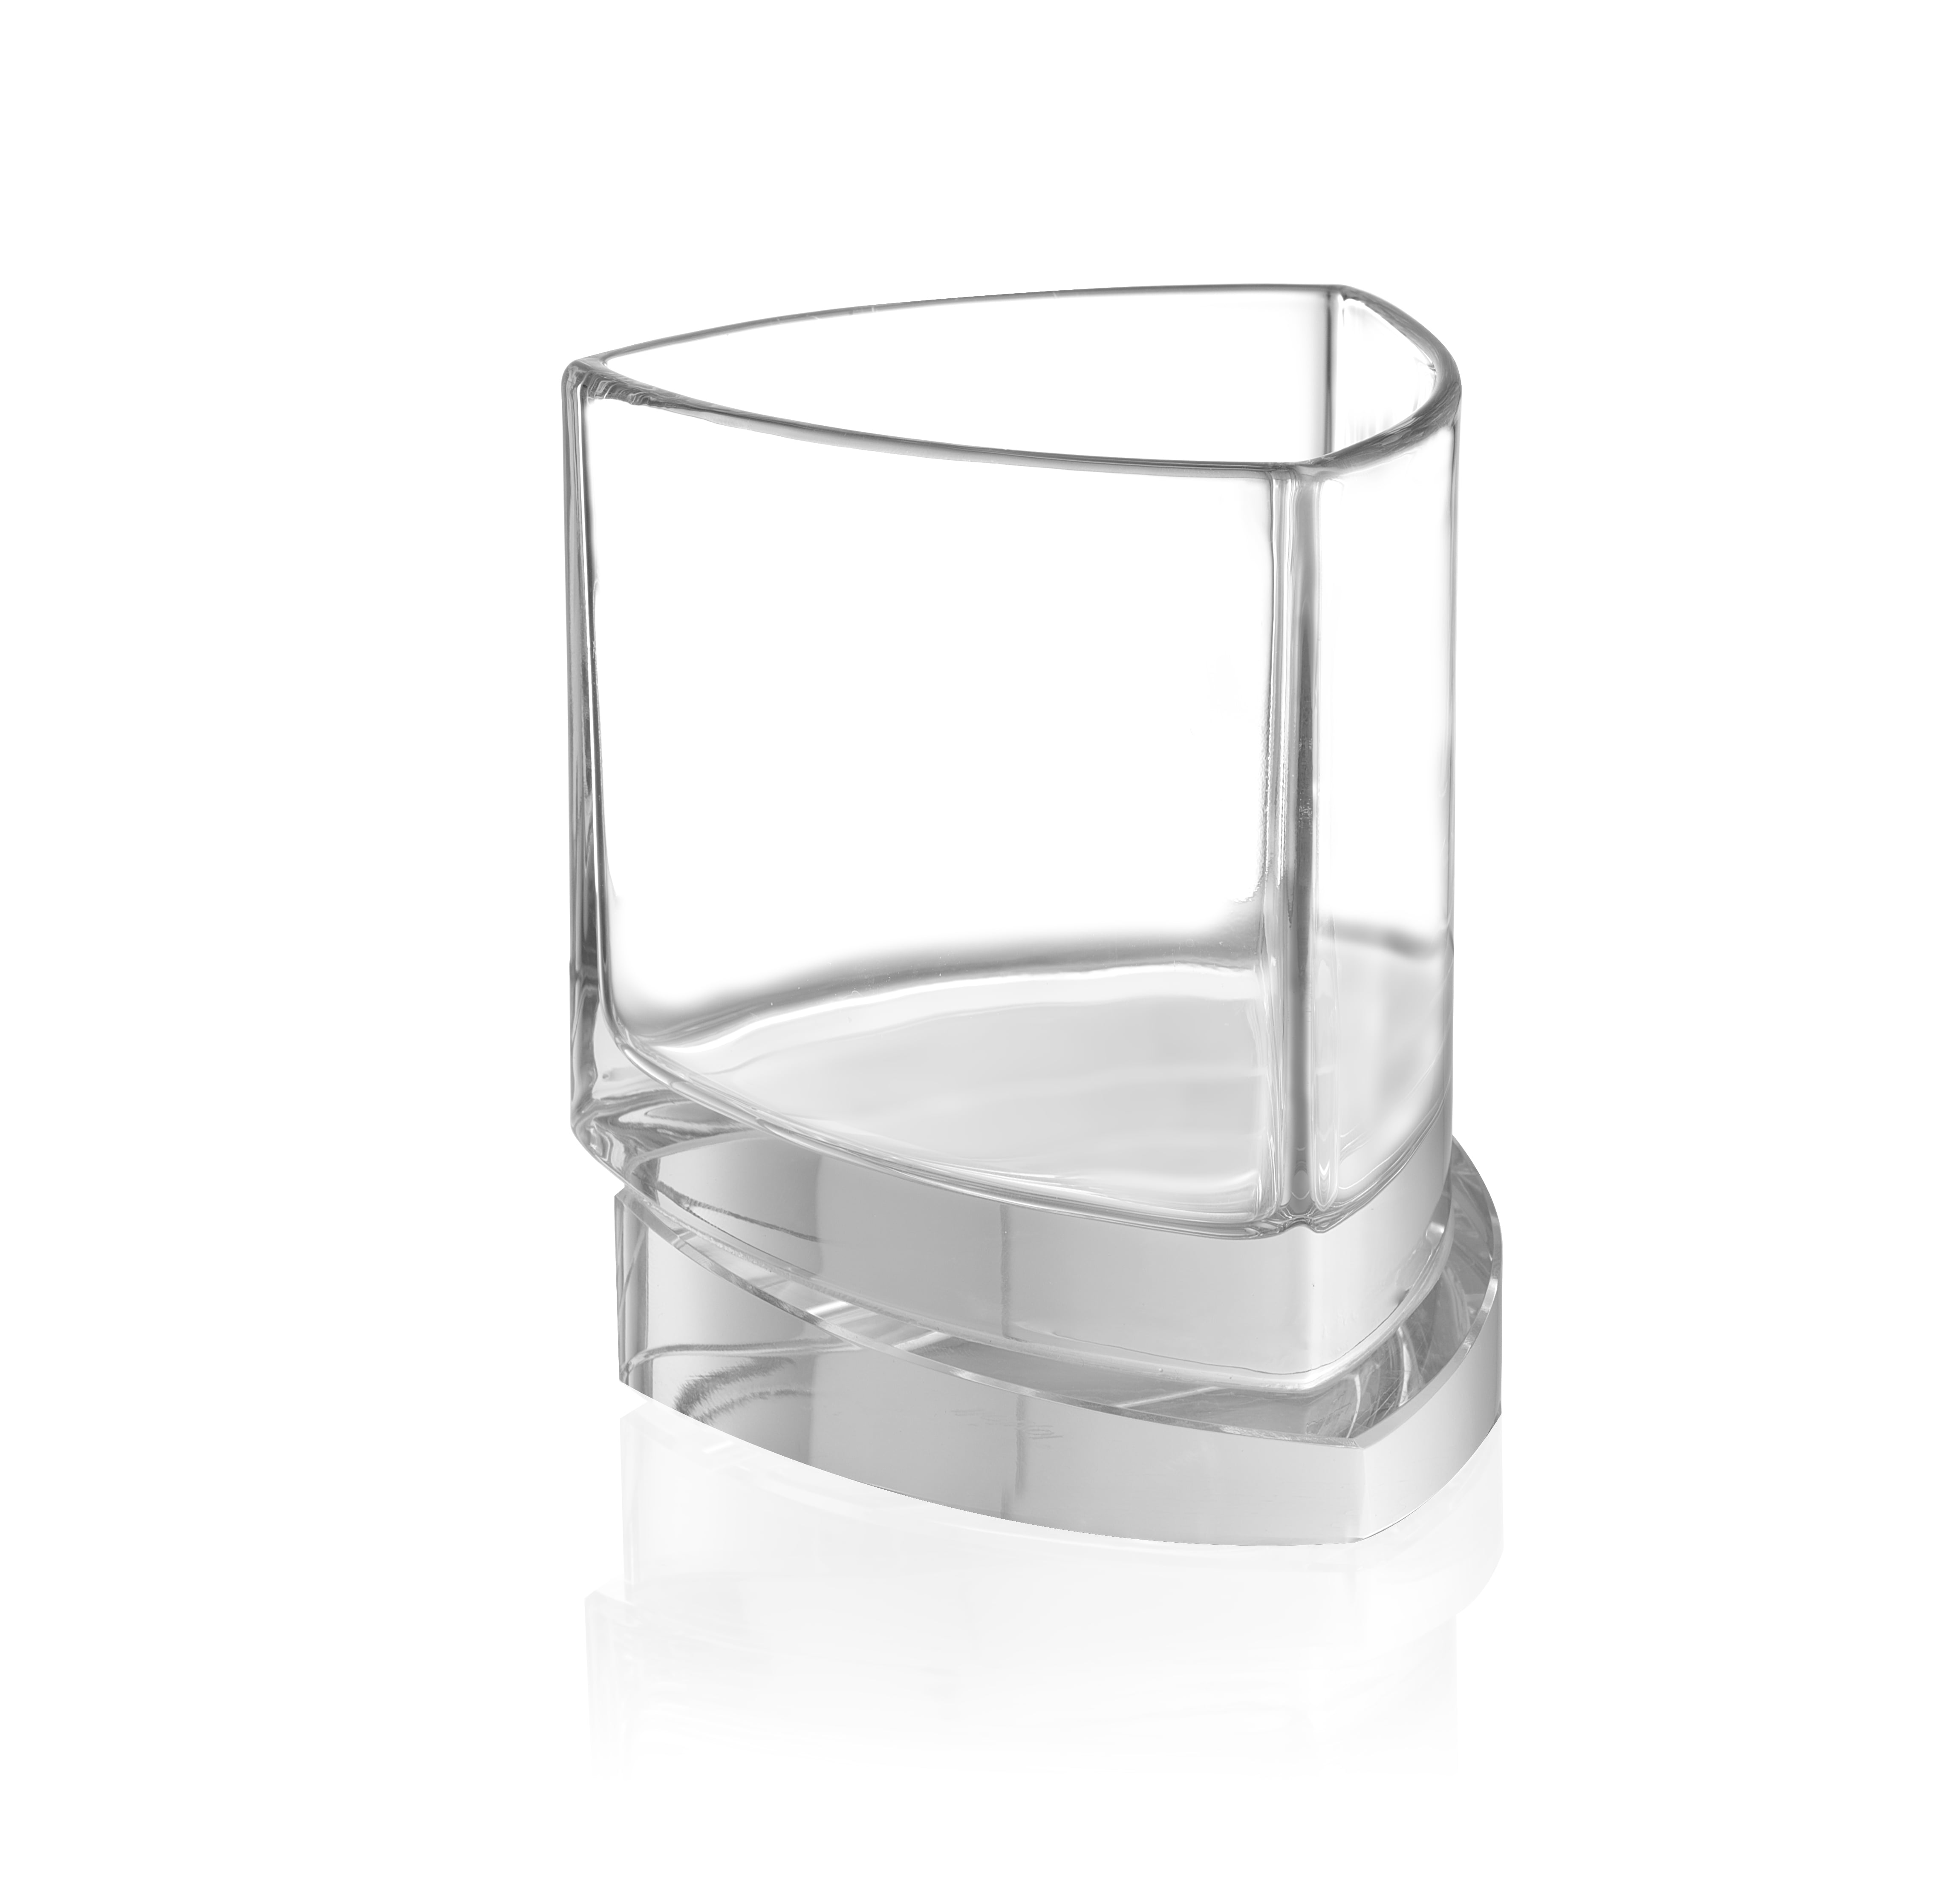 JoyJolt Aqua Vitae 10.5 oz. Off Base Octagon Whiskey Glasses (Set of 2)  AQ10153 - The Home Depot